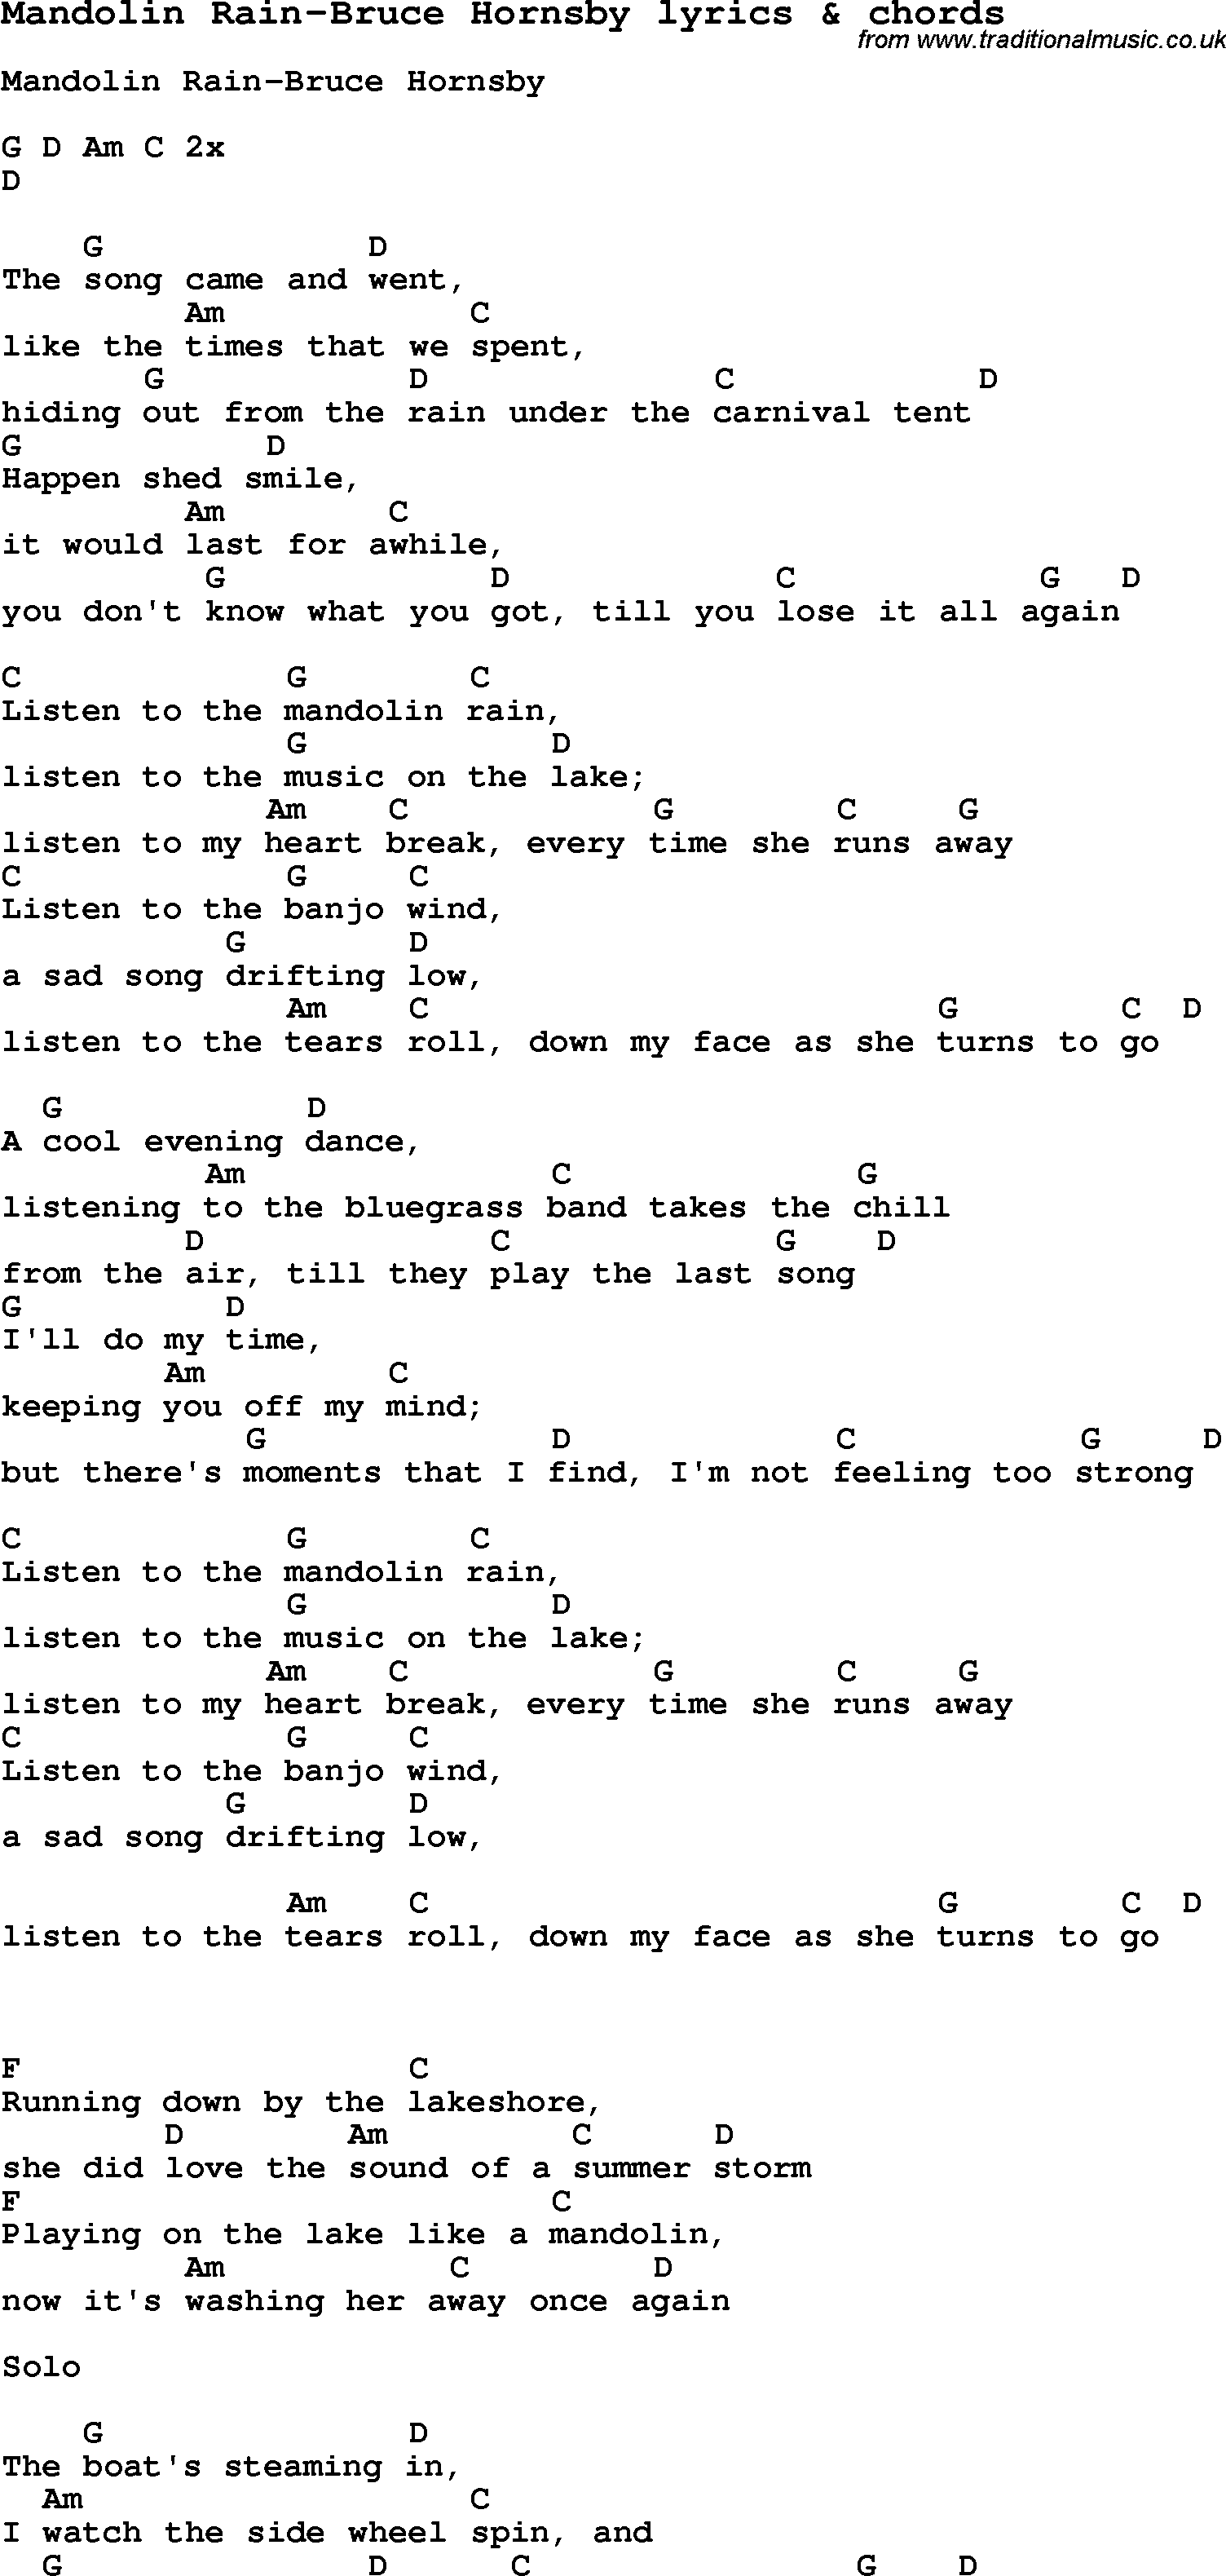 Love Song Lyrics for: Mandolin Rain-Bruce Hornsby with chords for Ukulele, Guitar Banjo etc.